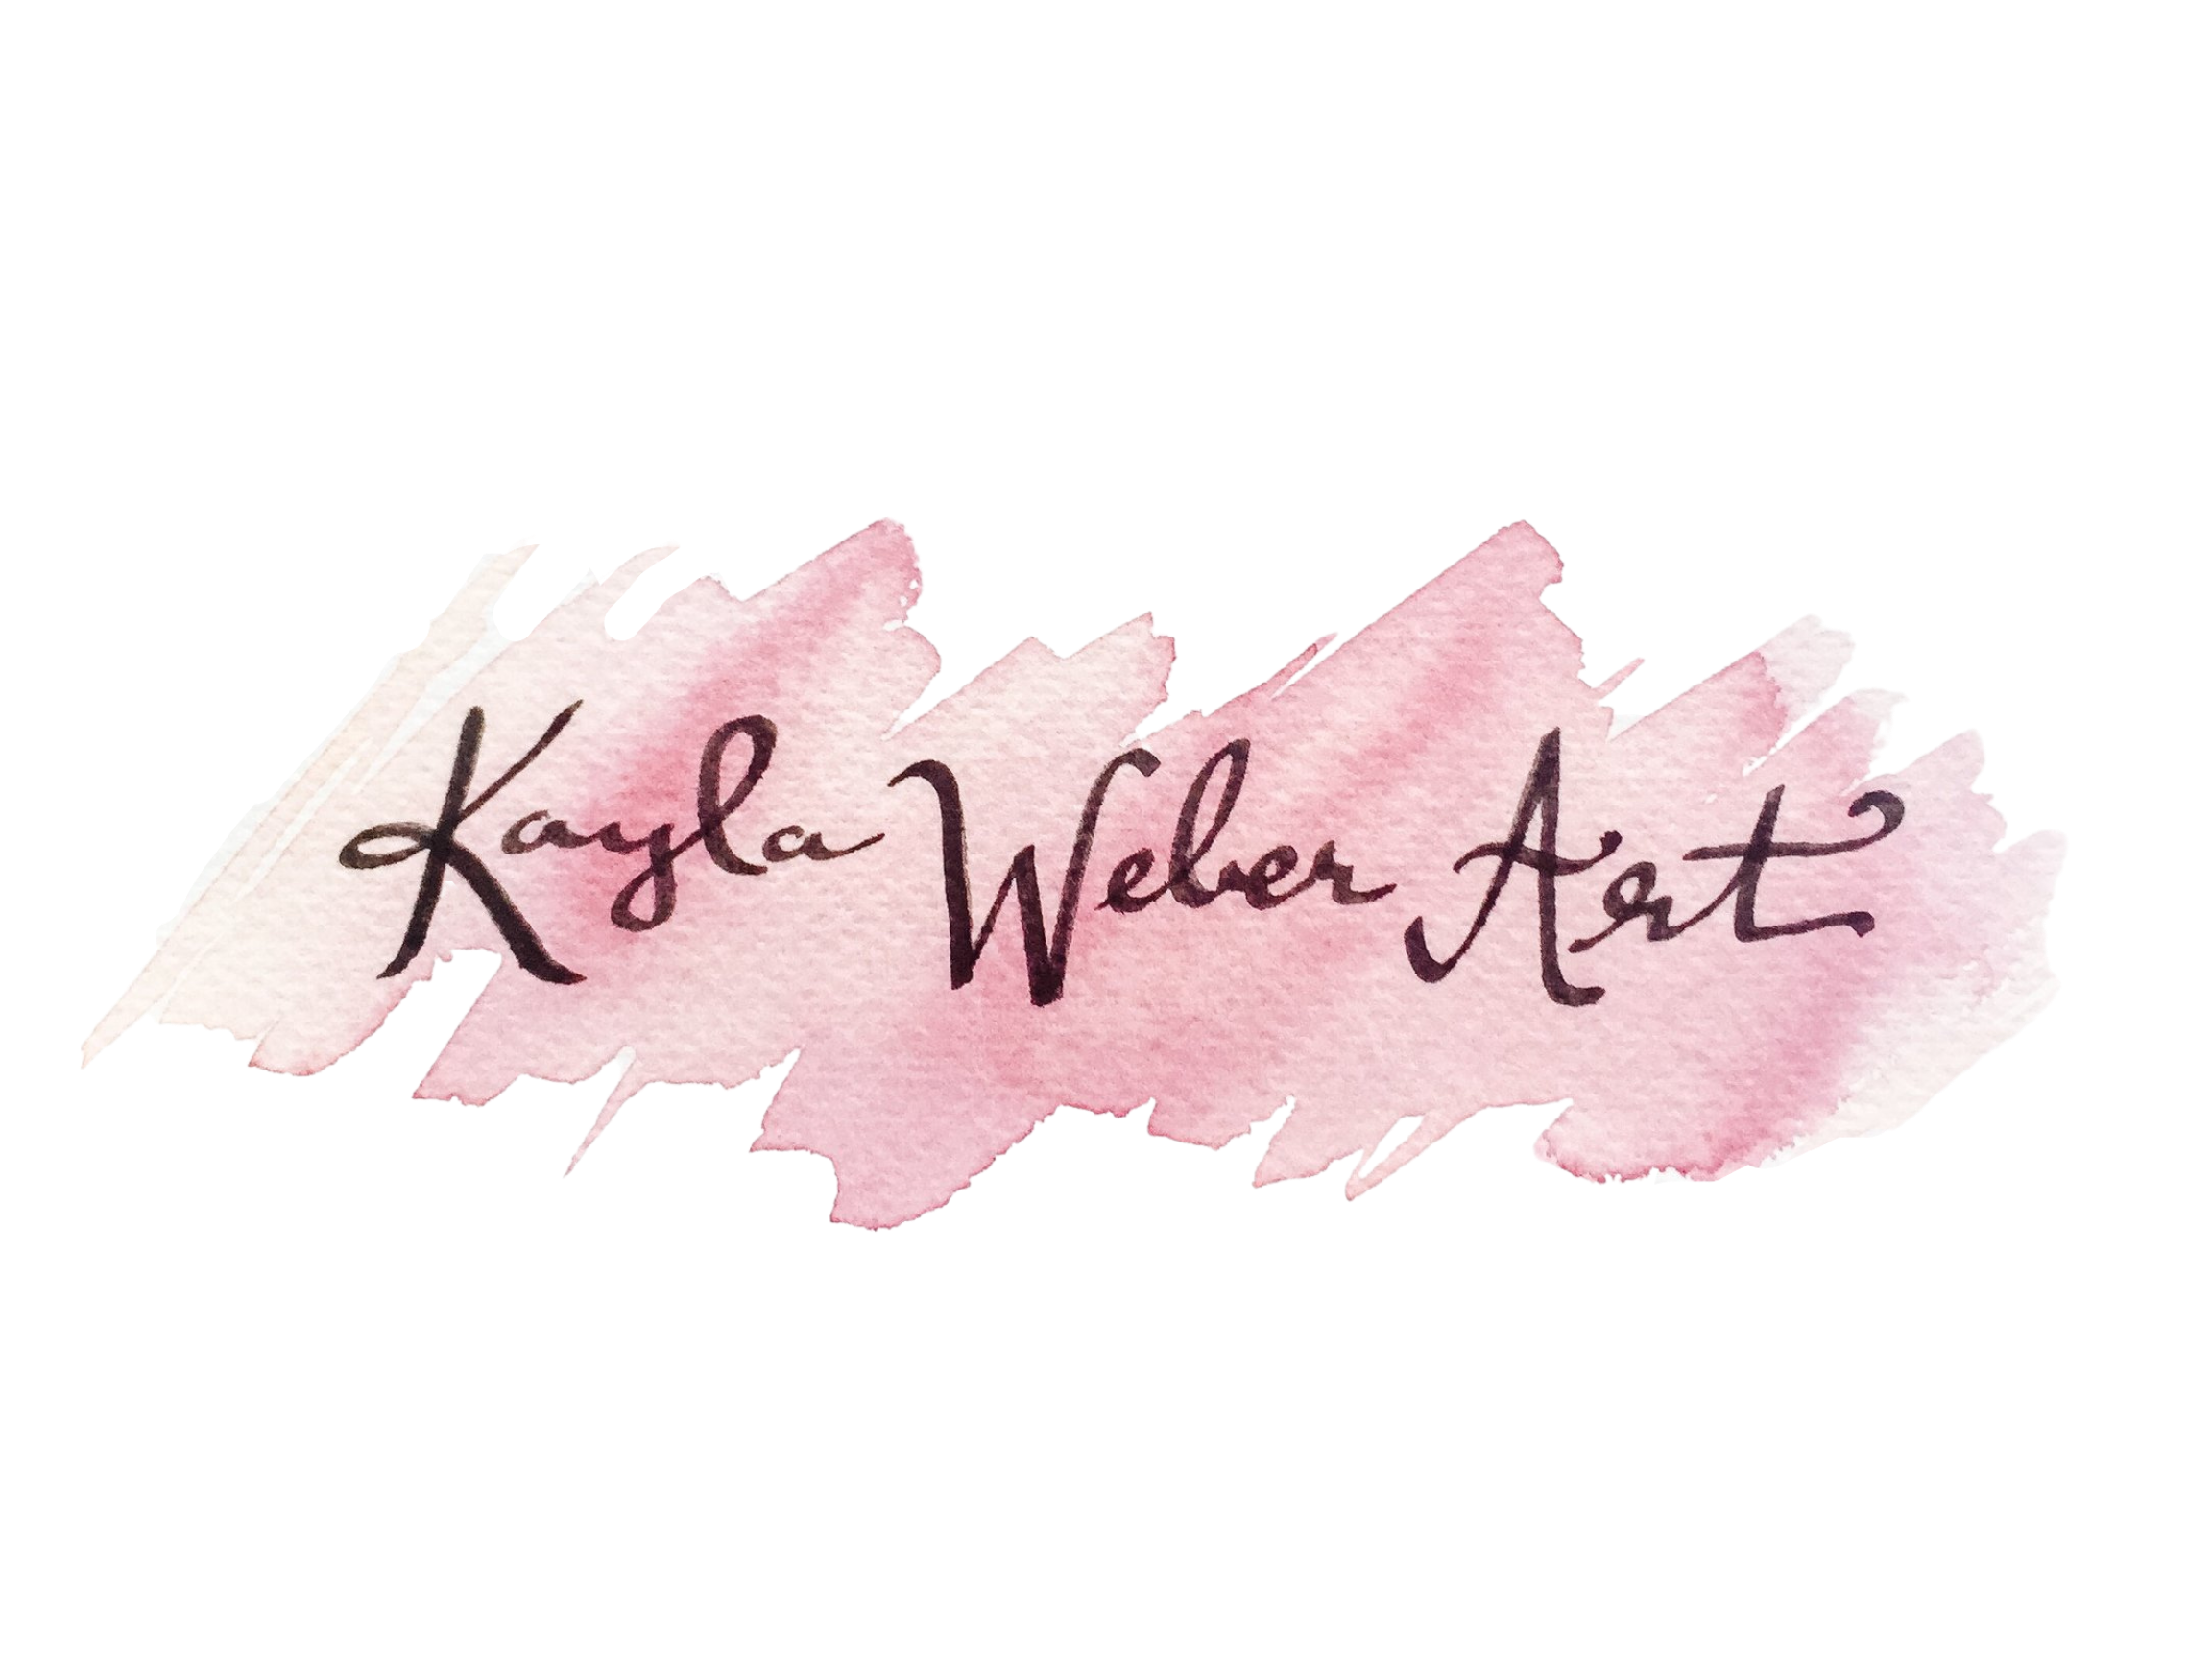 Kayla Weber Art Wholesale